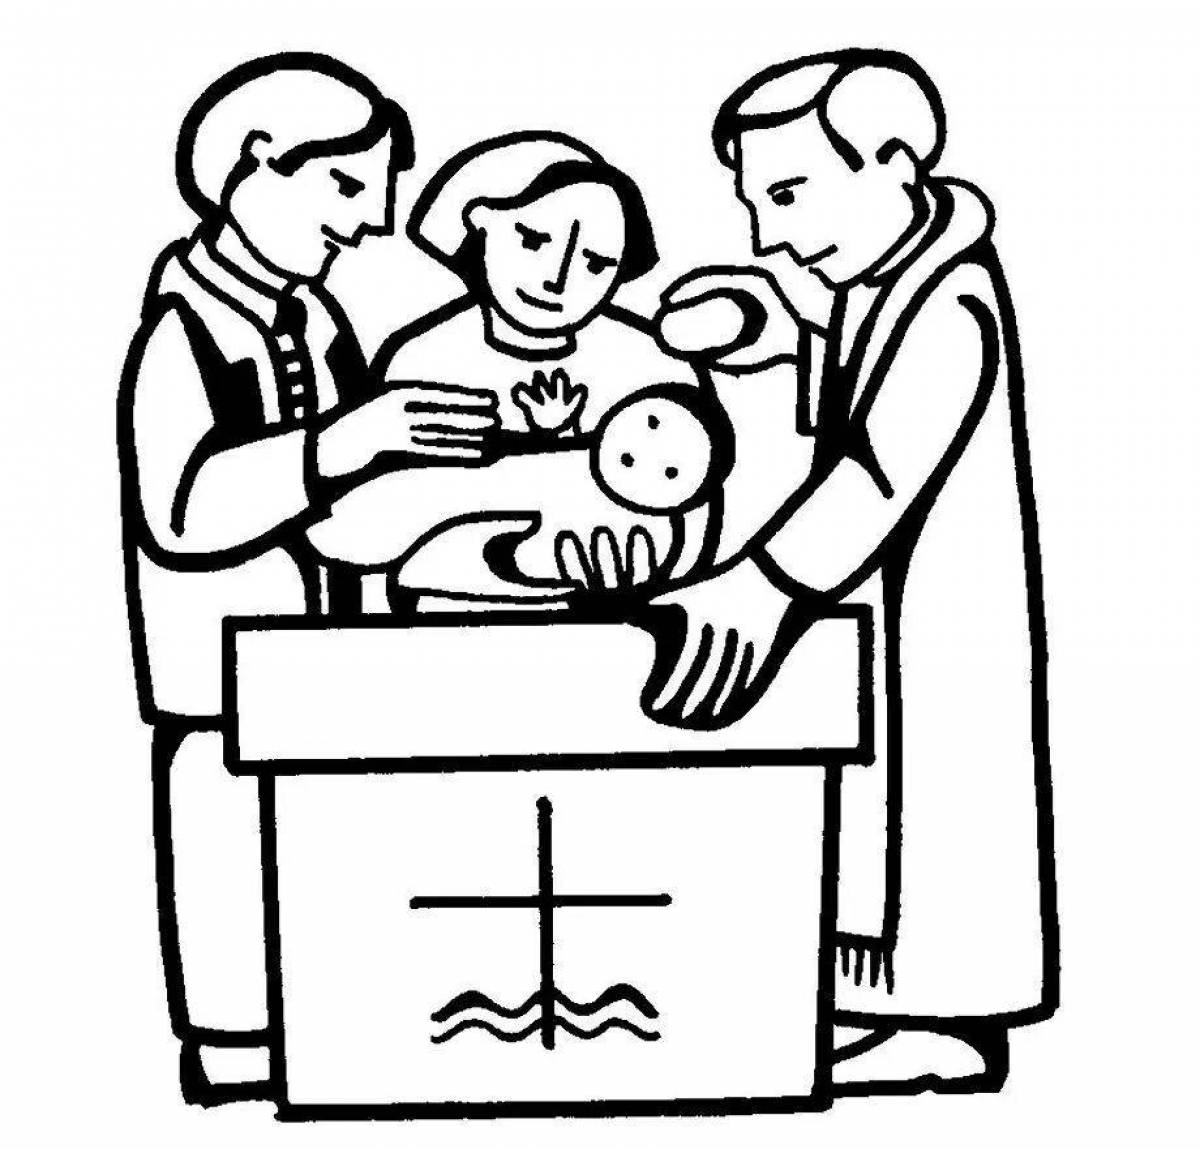 Great coloring sacrament of baptism